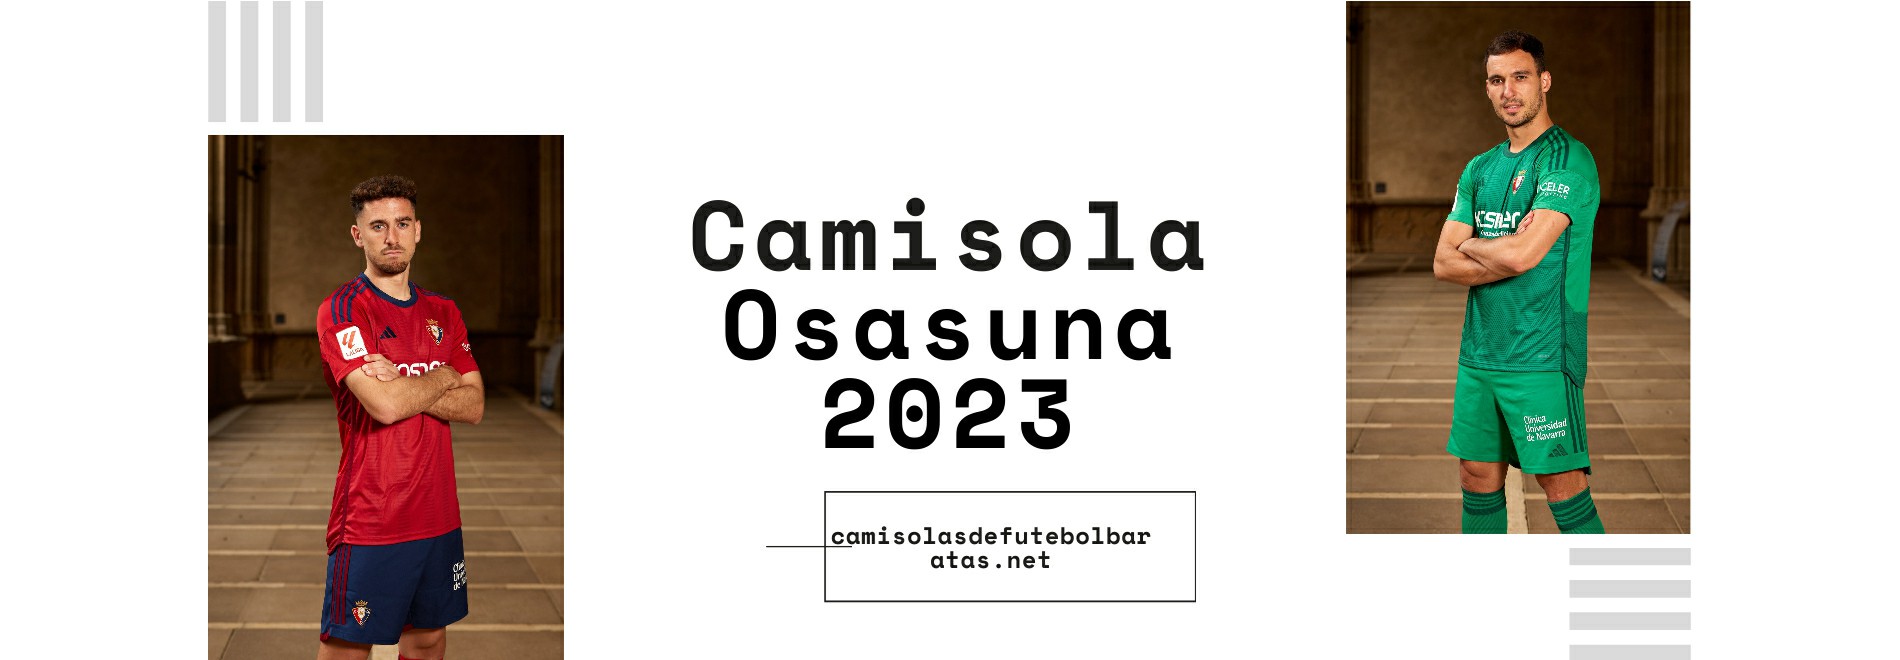 Camisola Osasuna 2023-2024